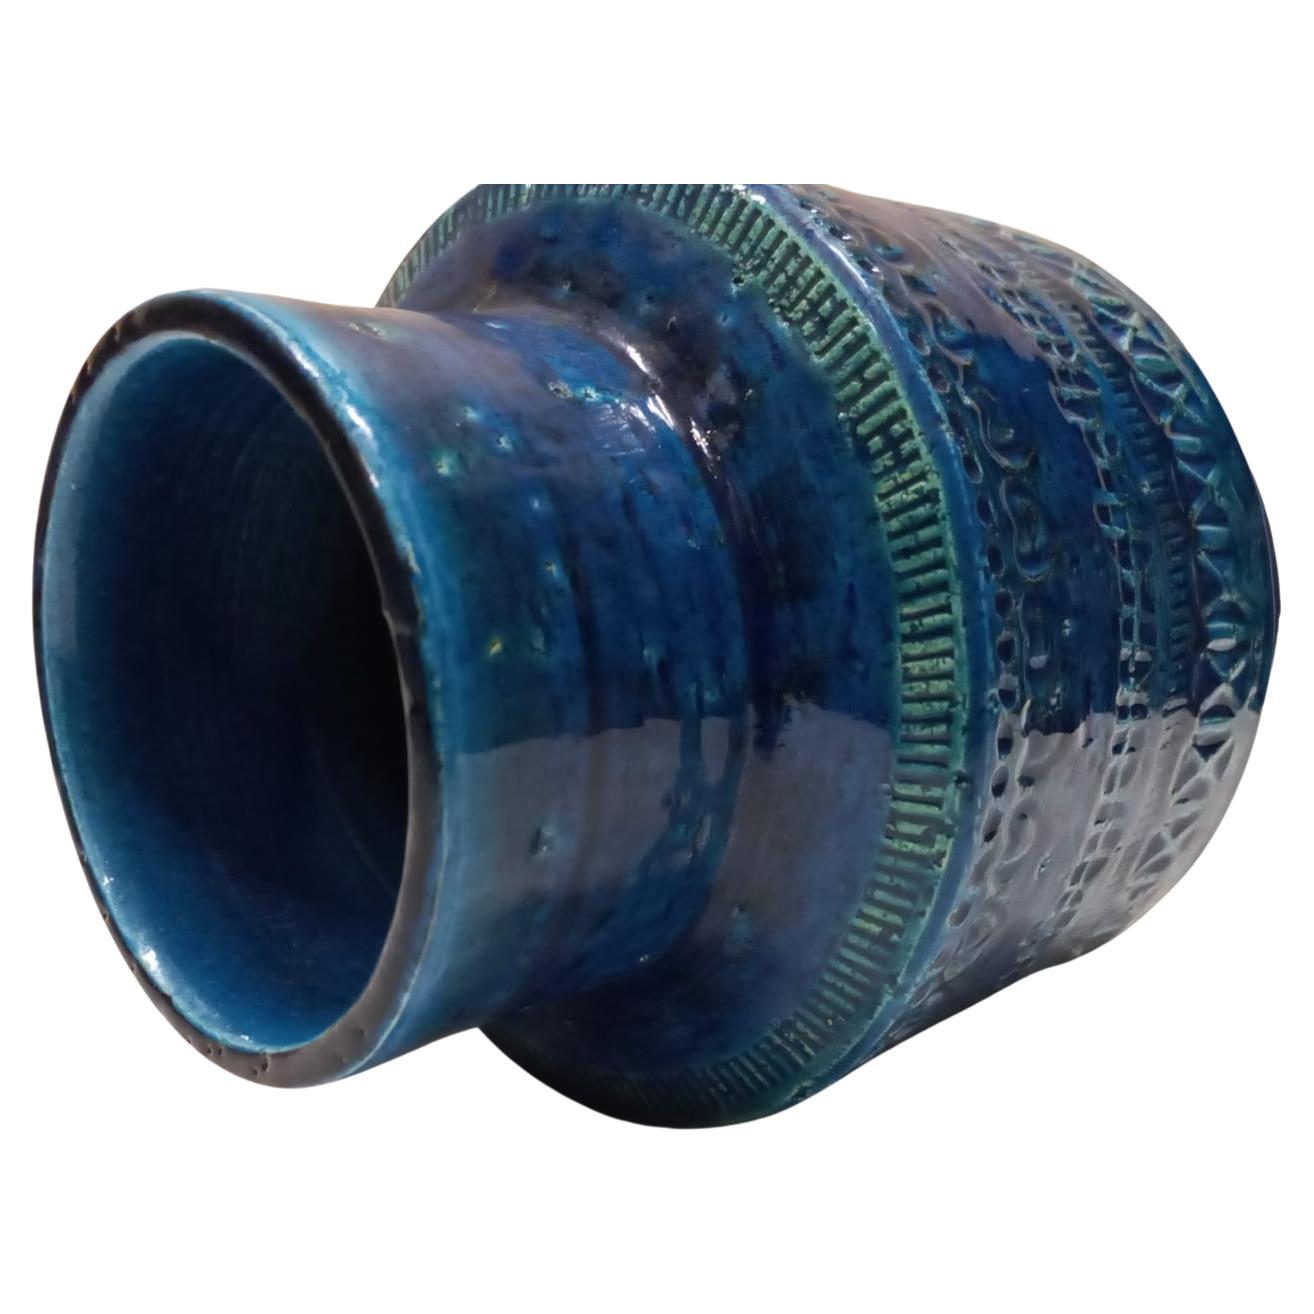 Aldo Londi Circular Ceramic Vase, Blue Glazed, Bitossi, Mid 20th Century 2